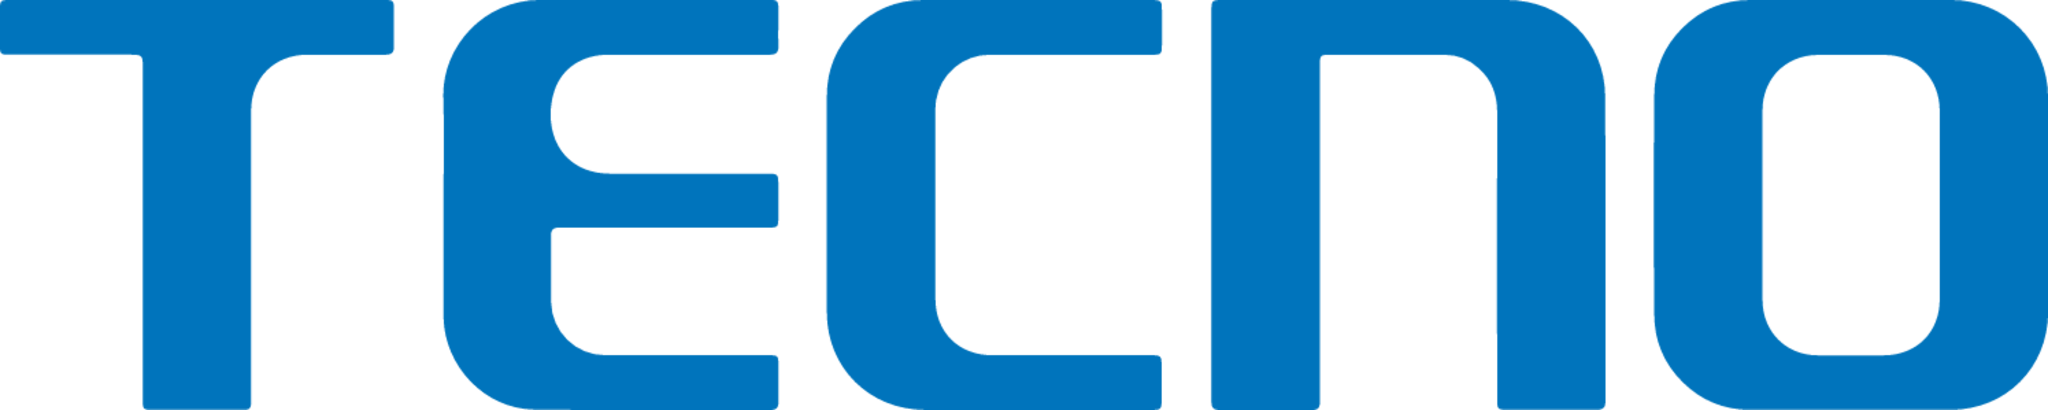 Tecno" Icon - Download for free – Iconduck